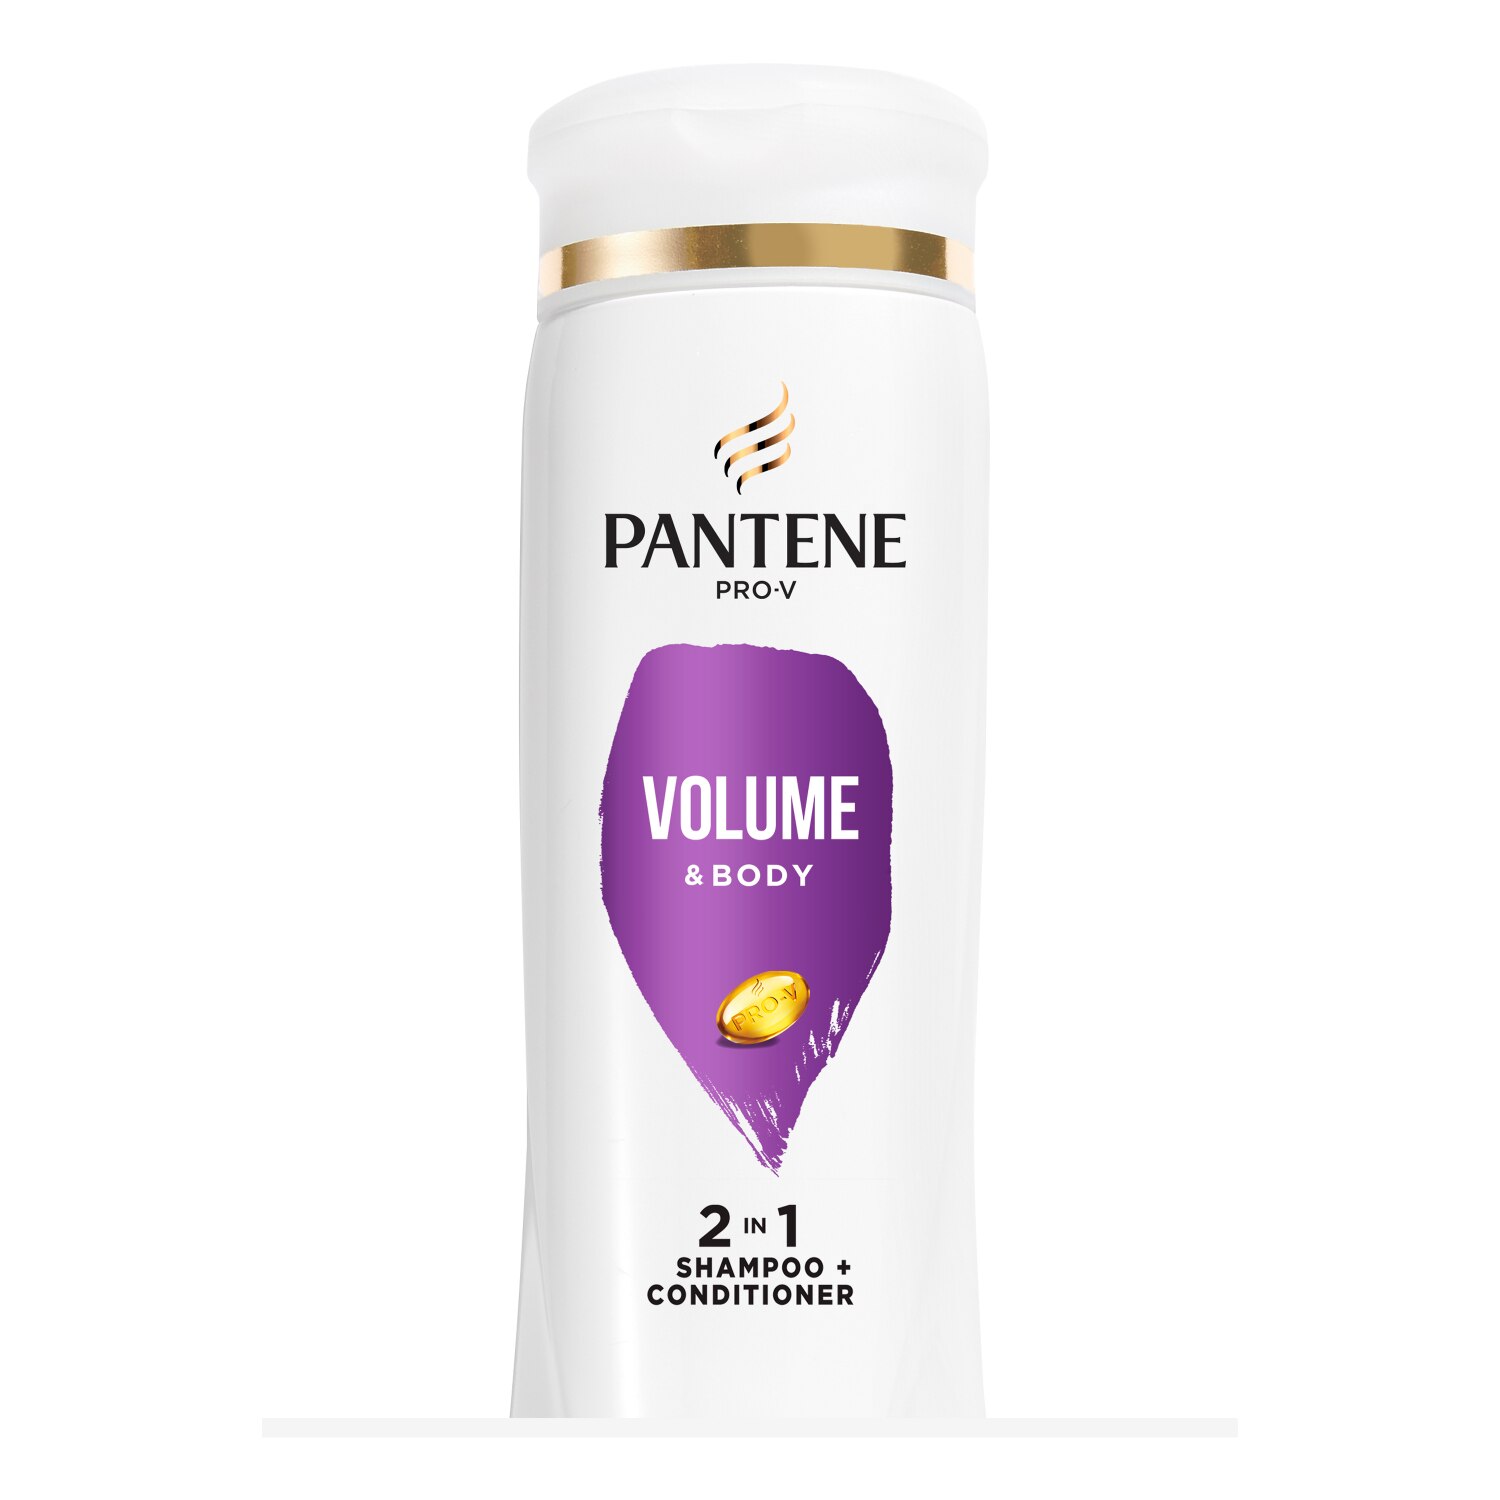 Pantene Pro-V Volume & Body 2-in-1 Shampoo & Conditioner, 12 Oz , CVS